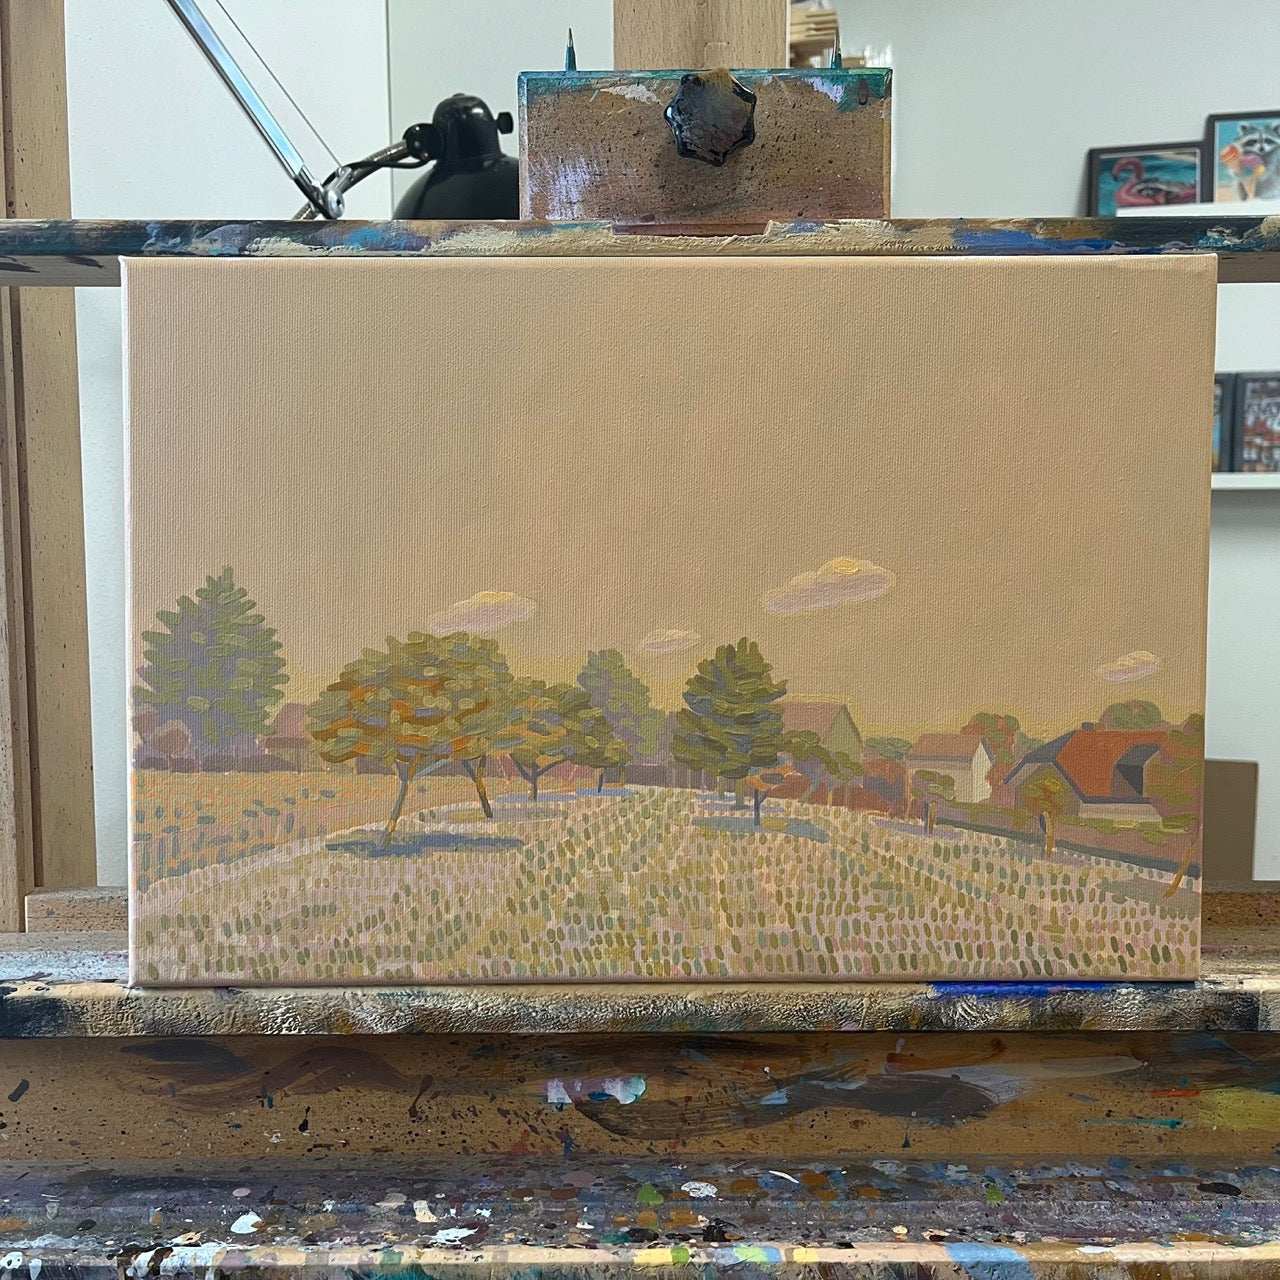 Small orchard, unique, painting, hand-painted unique piece, 45 x 30 cm, acrylic paint on canvas